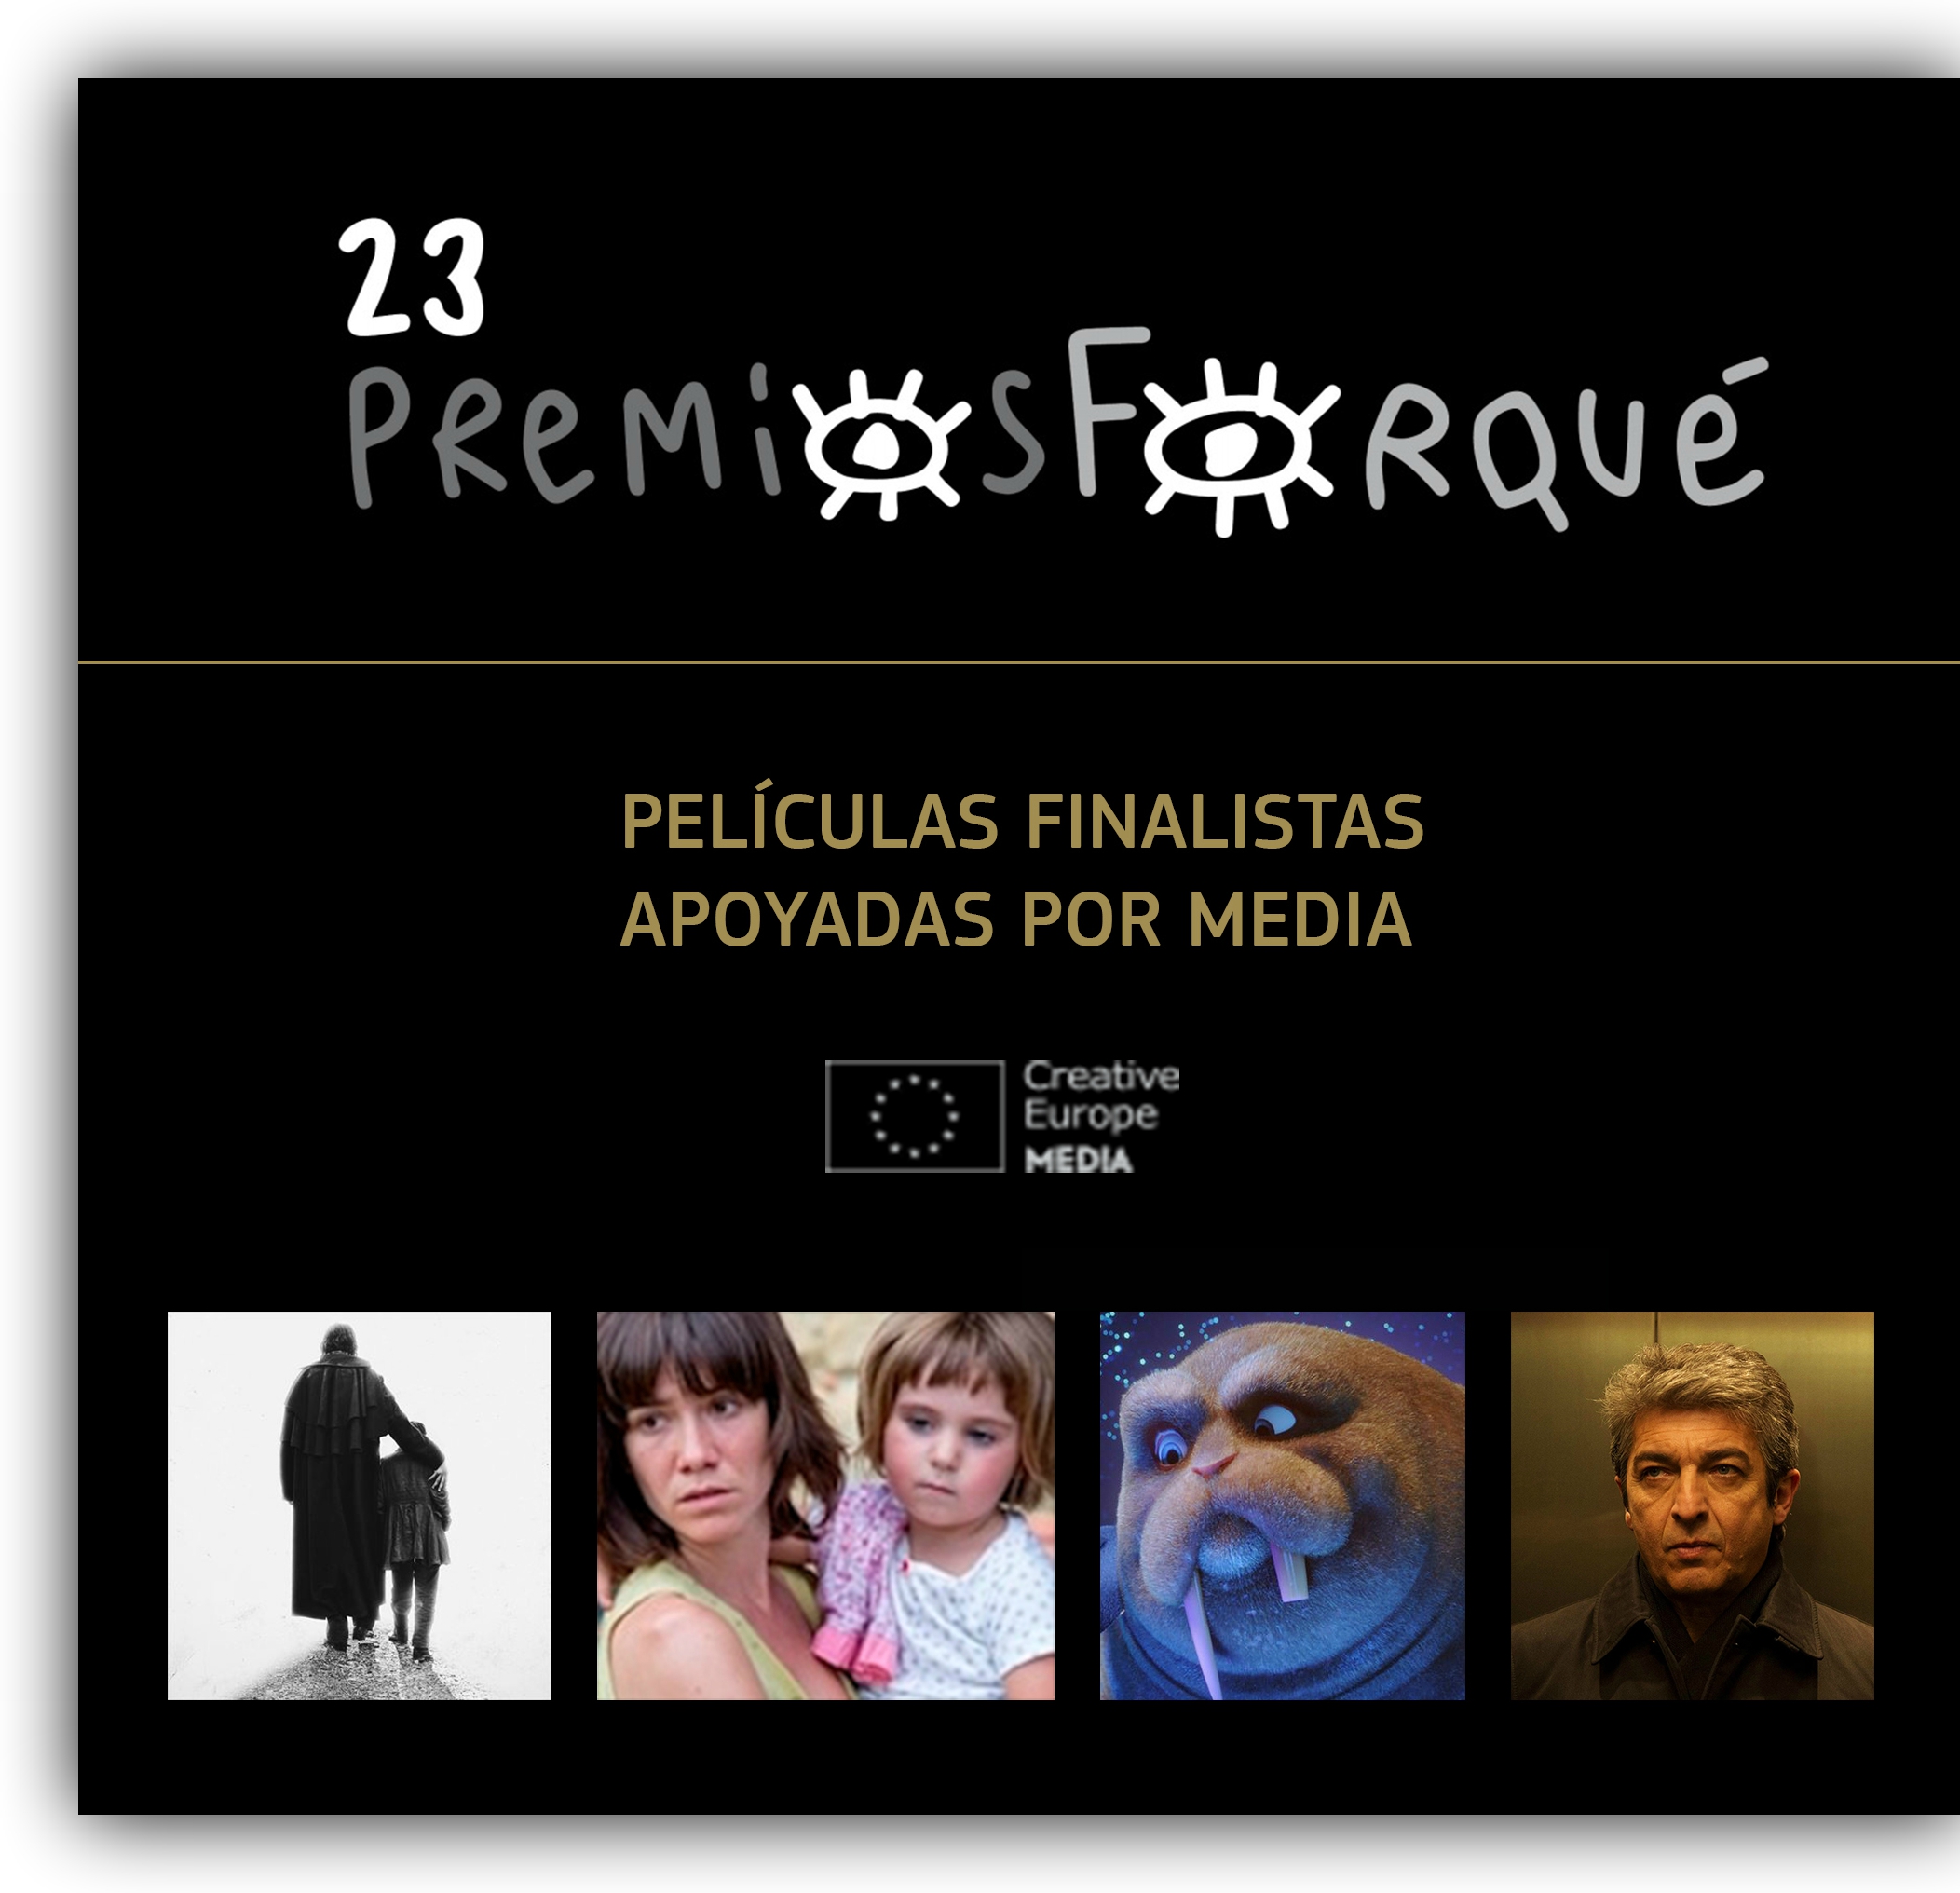 PremiosForque2018EgedaInteriorb